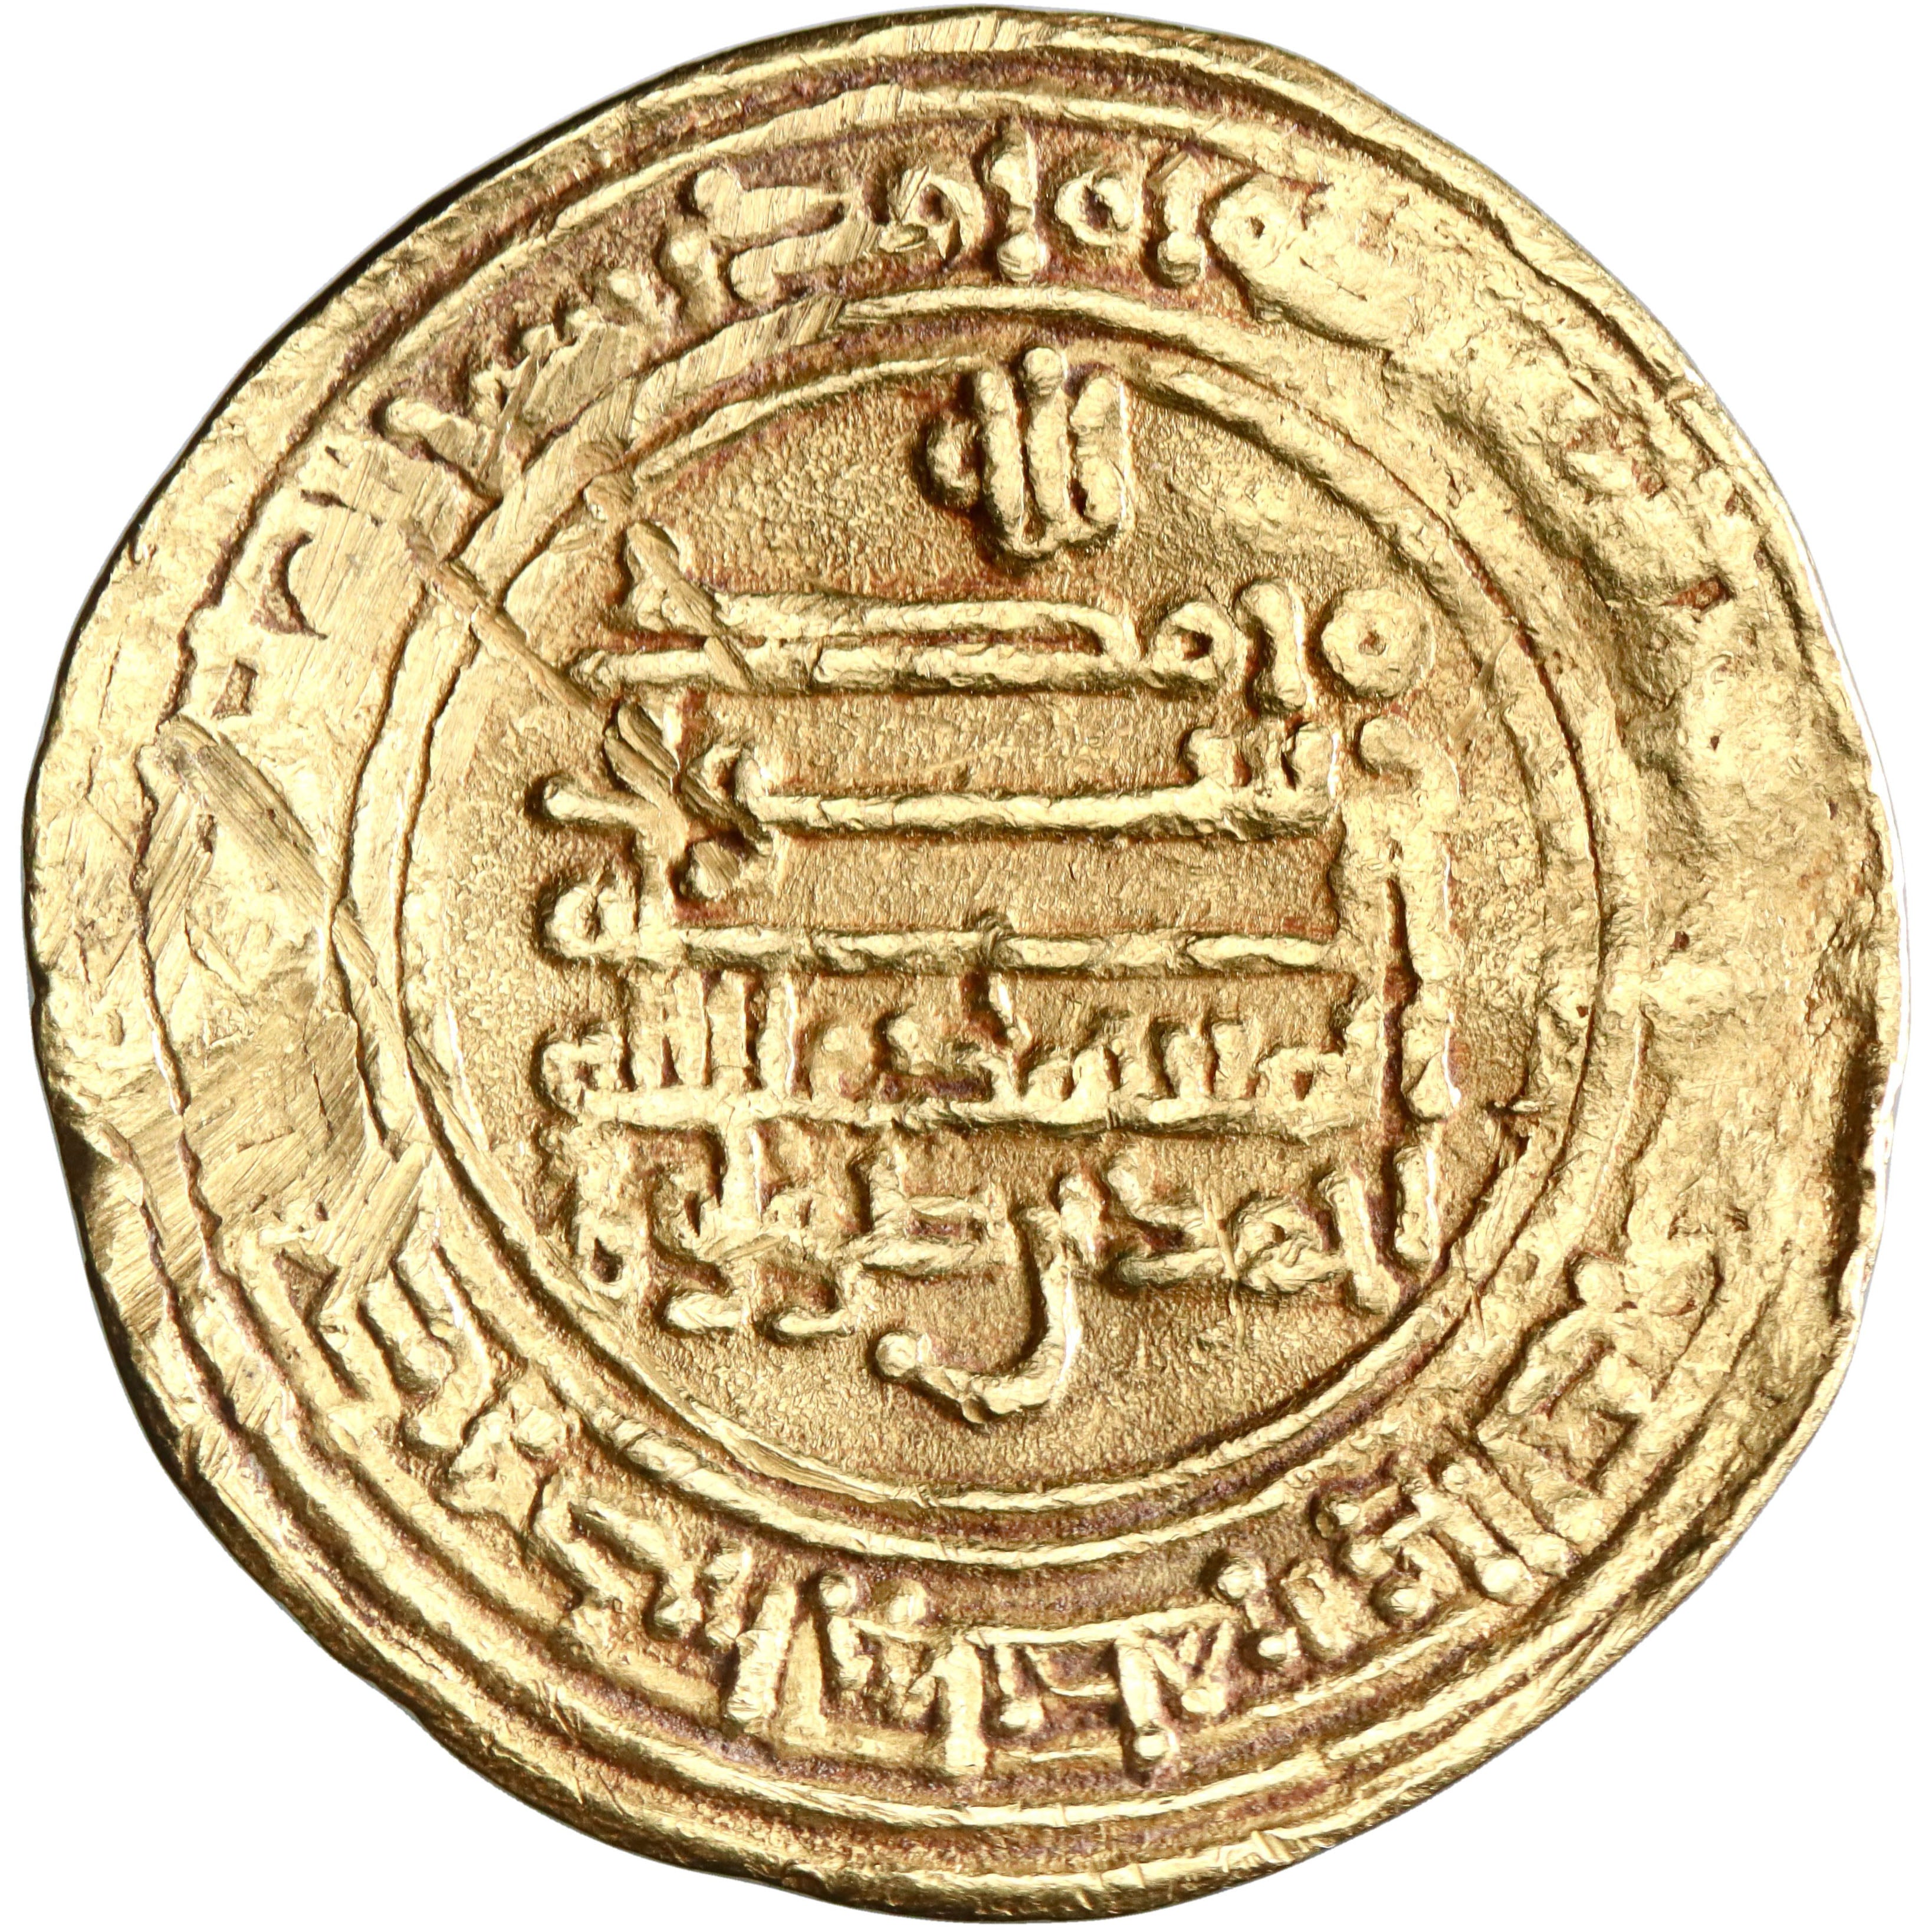 Tulunid, Ahmad ibn Tulun, gold dinar, Misr (Egypt) mint, AH 268, citing al-Mu'tamid and al-Mufawwidh